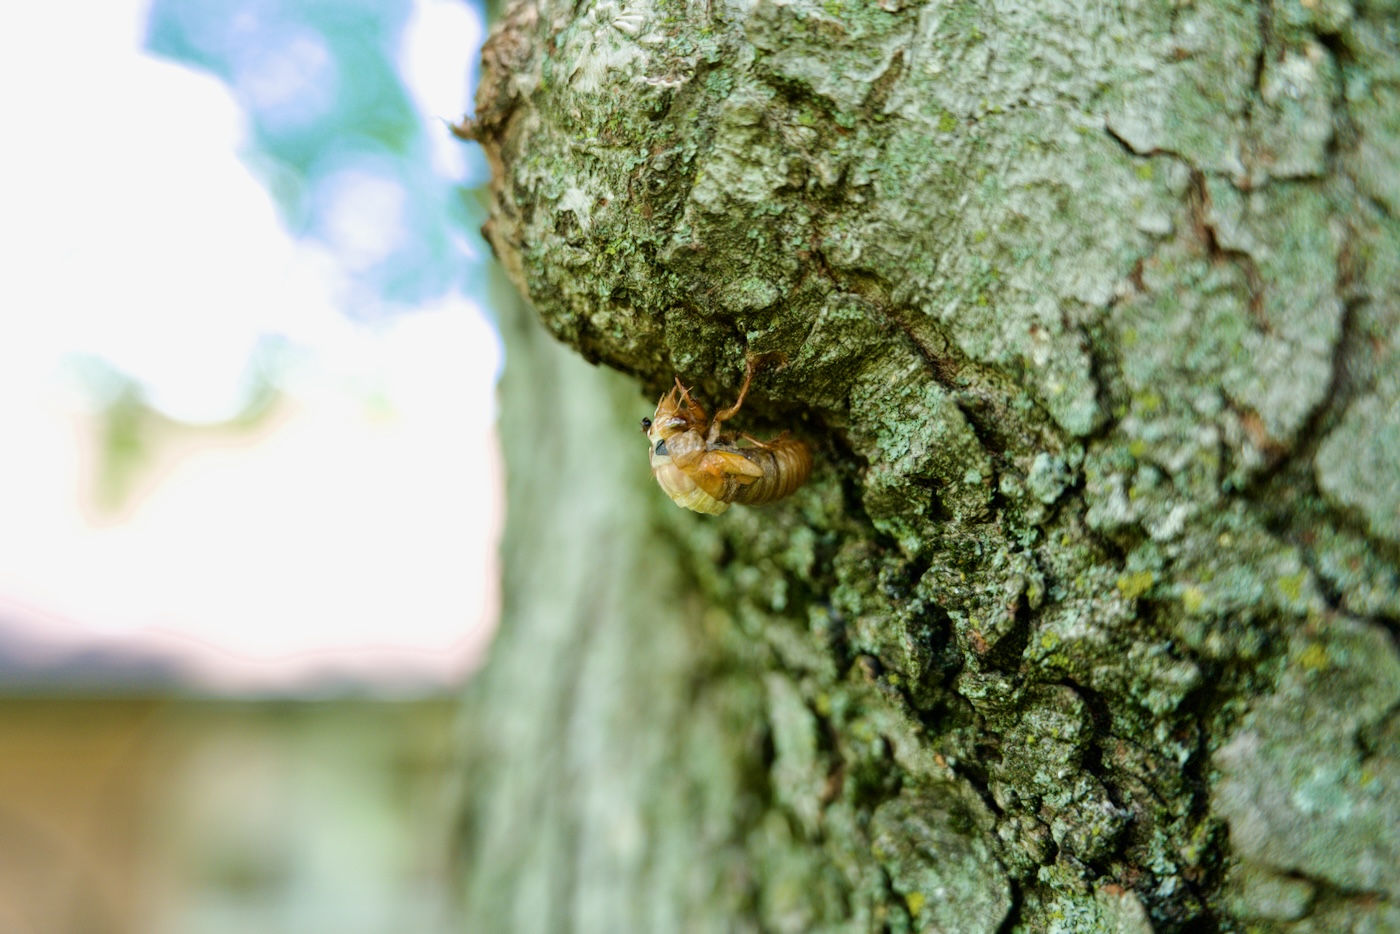 Cicada shedding skin on tree